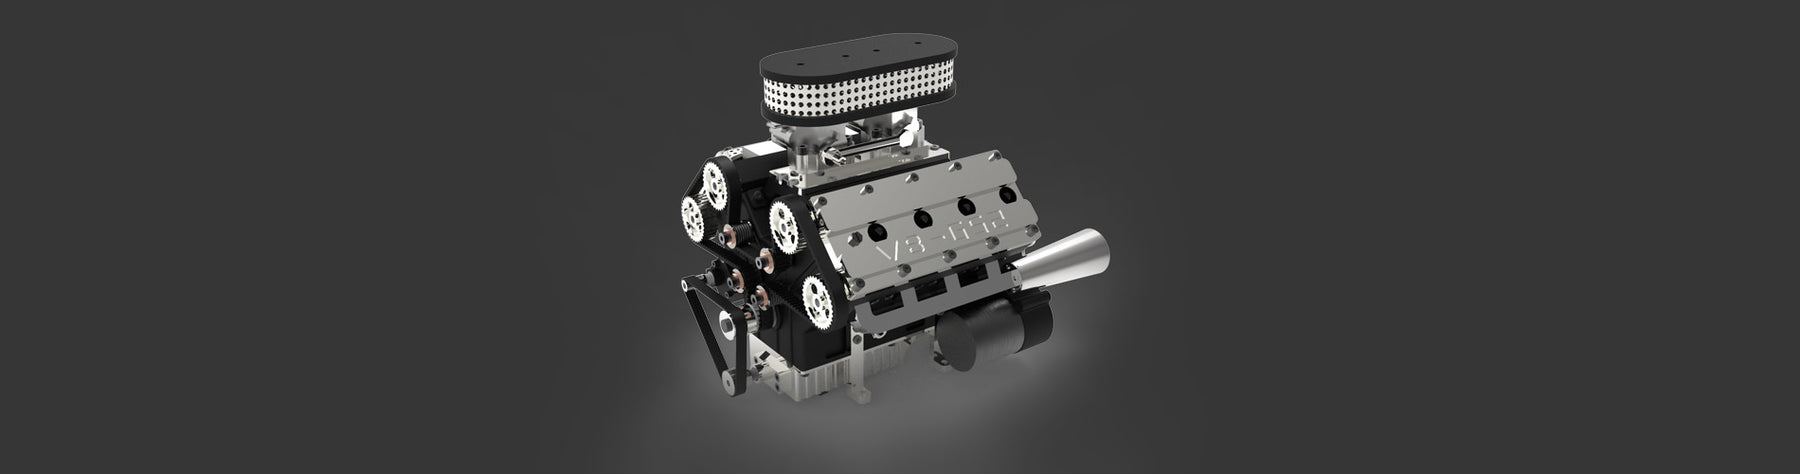 Enjomor V8 Engine Model Will Be Released in 2022? - EngineDIY